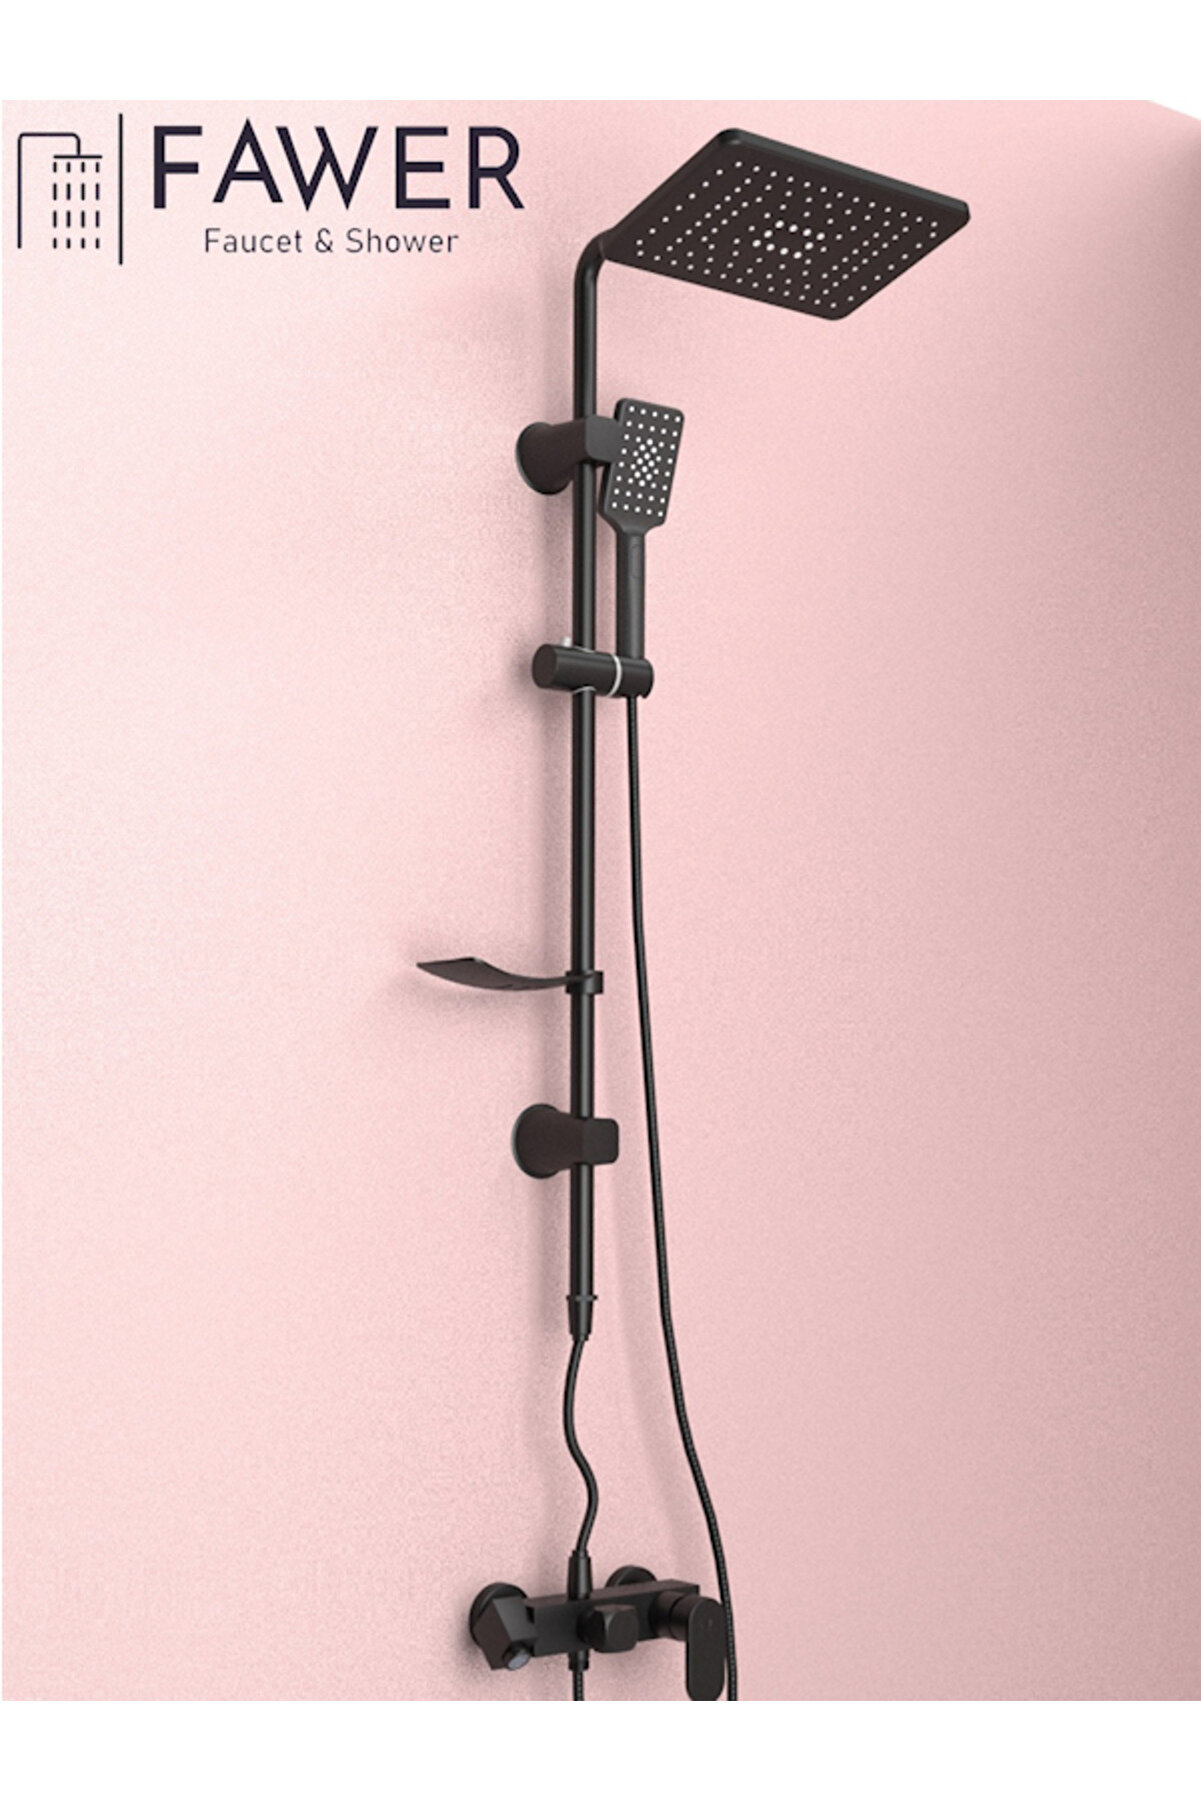 FAWER Faucet & Shower Fawer Berlin Siyah Robot Duş Seti & Siyah Banyo Bataryası - 500b2